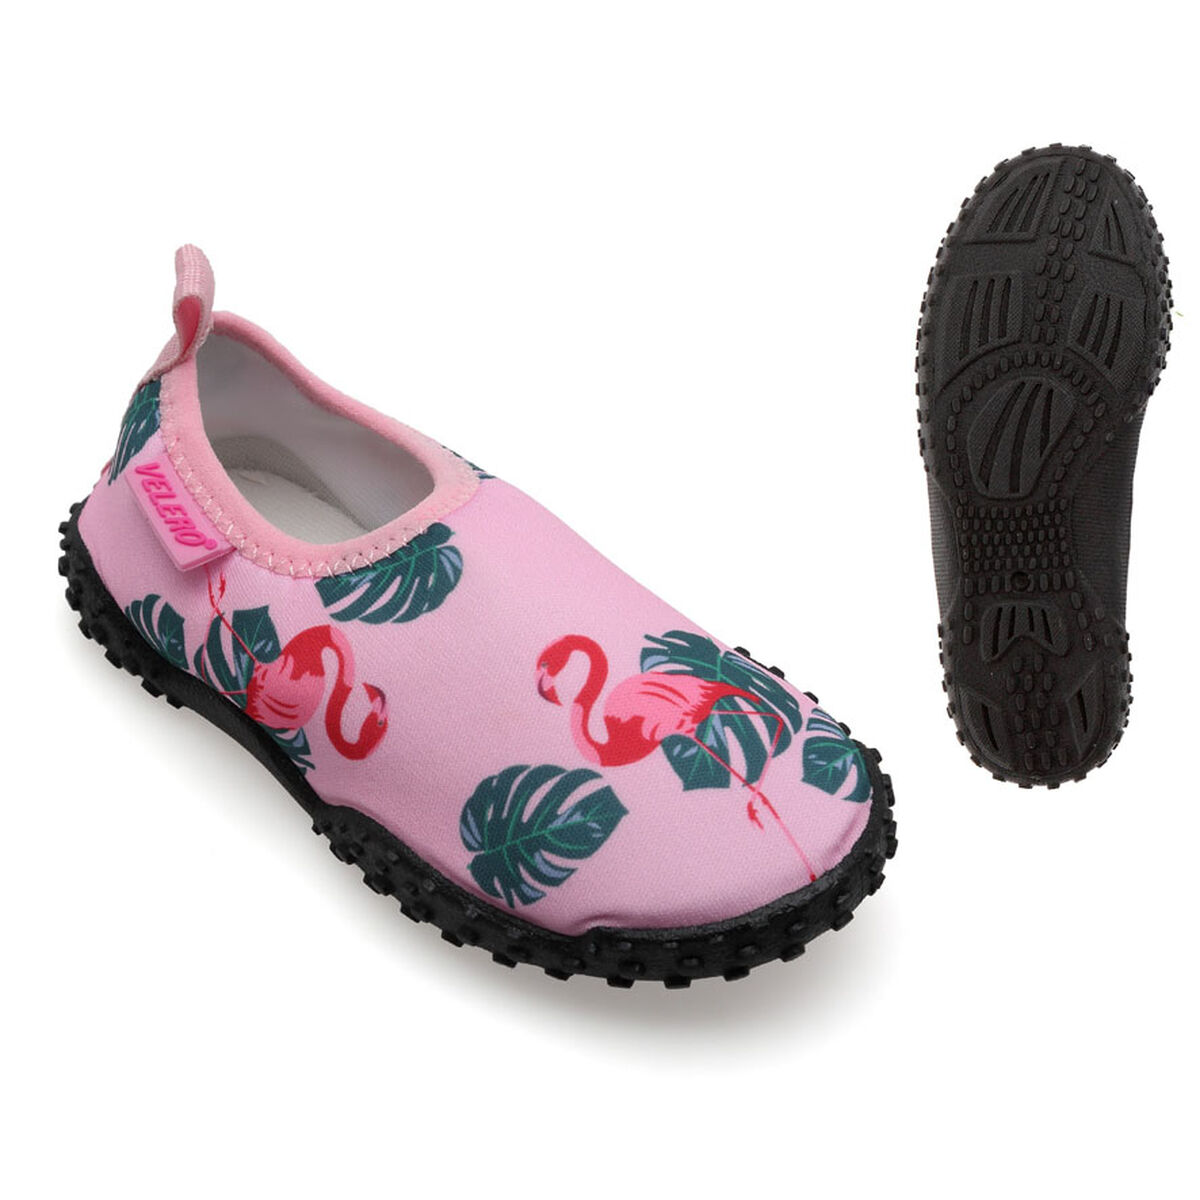 Botoși pentru Copii Flamingo Roz - Mărime la picior 33